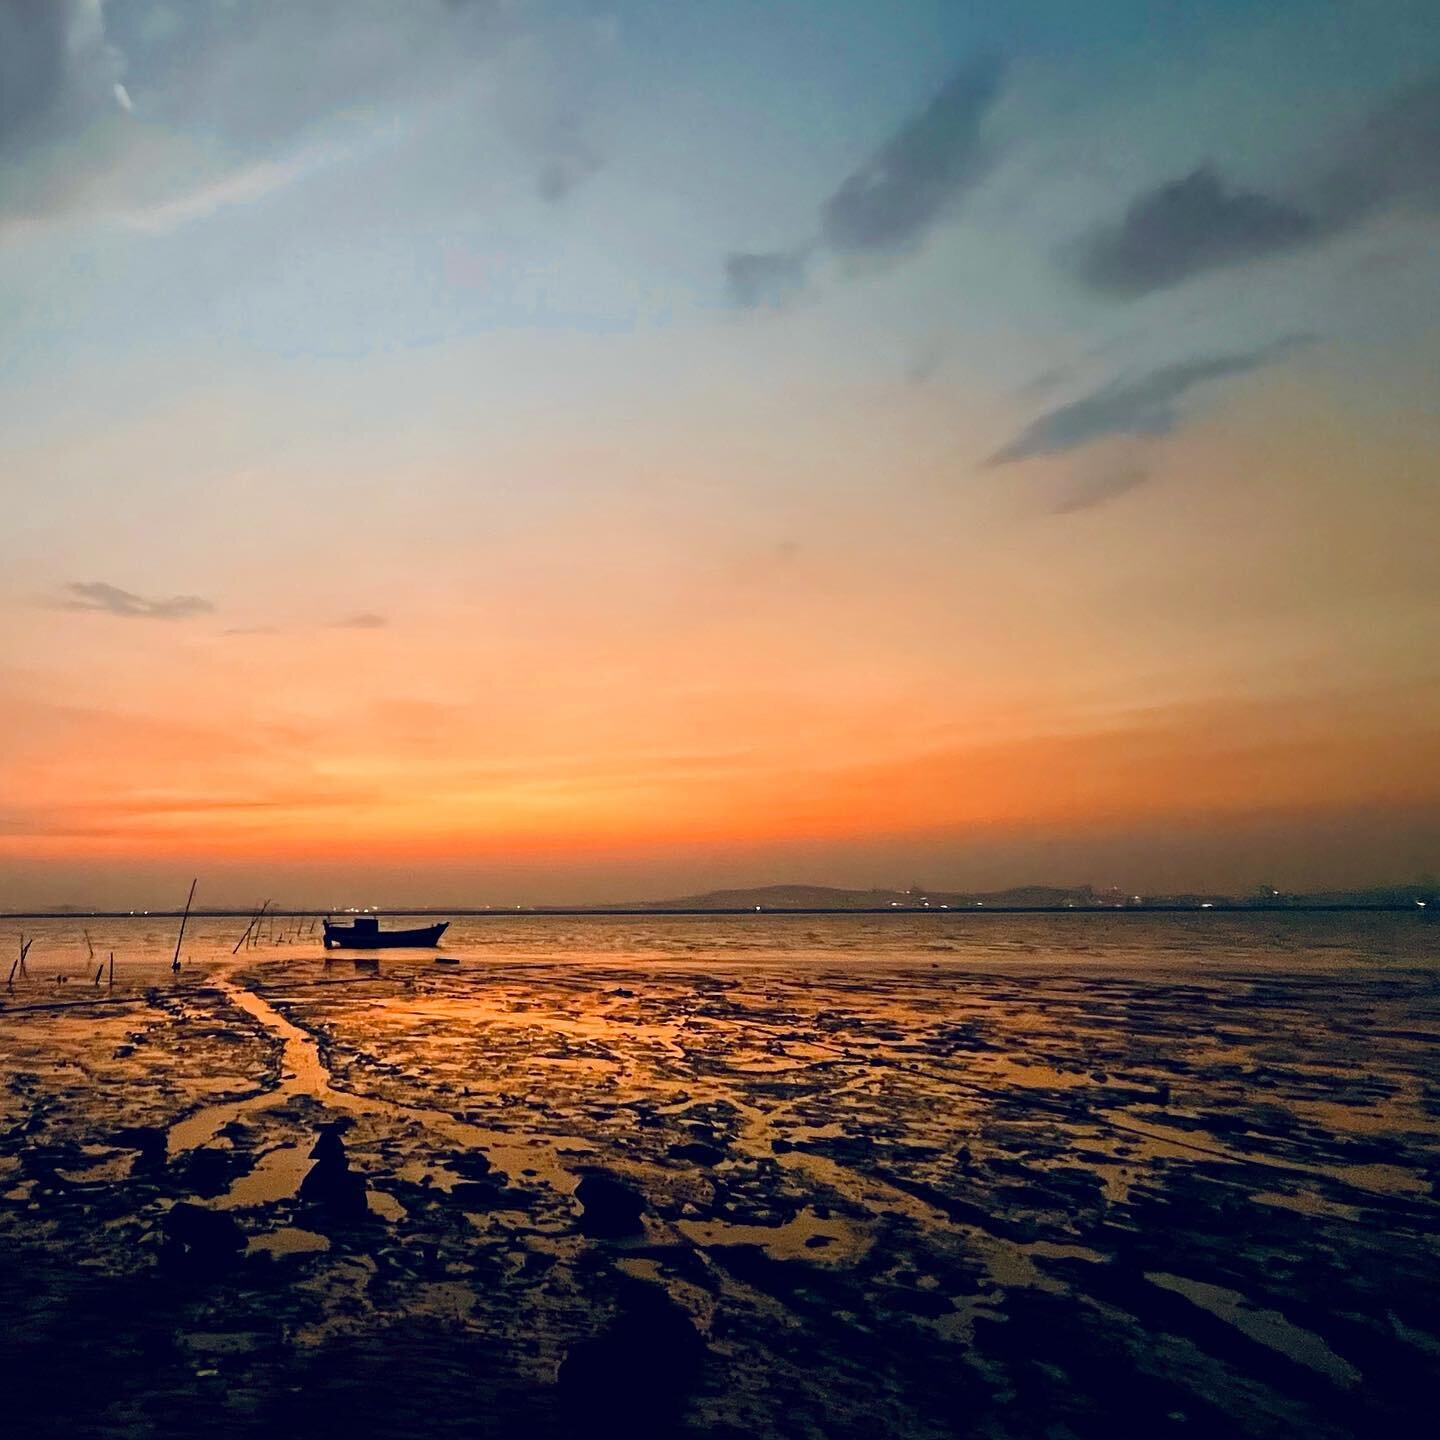 ...::BOAT::..
.
.
#beach #boat #sunset #orangesky #orange #mountains #pen #hometown #travel #sky #india #2023 #pictureoftheday #likeforlikes #nature #travelphotography #happy #green #mountains #solo_travel_er #shotoniphone #instagram #instalike